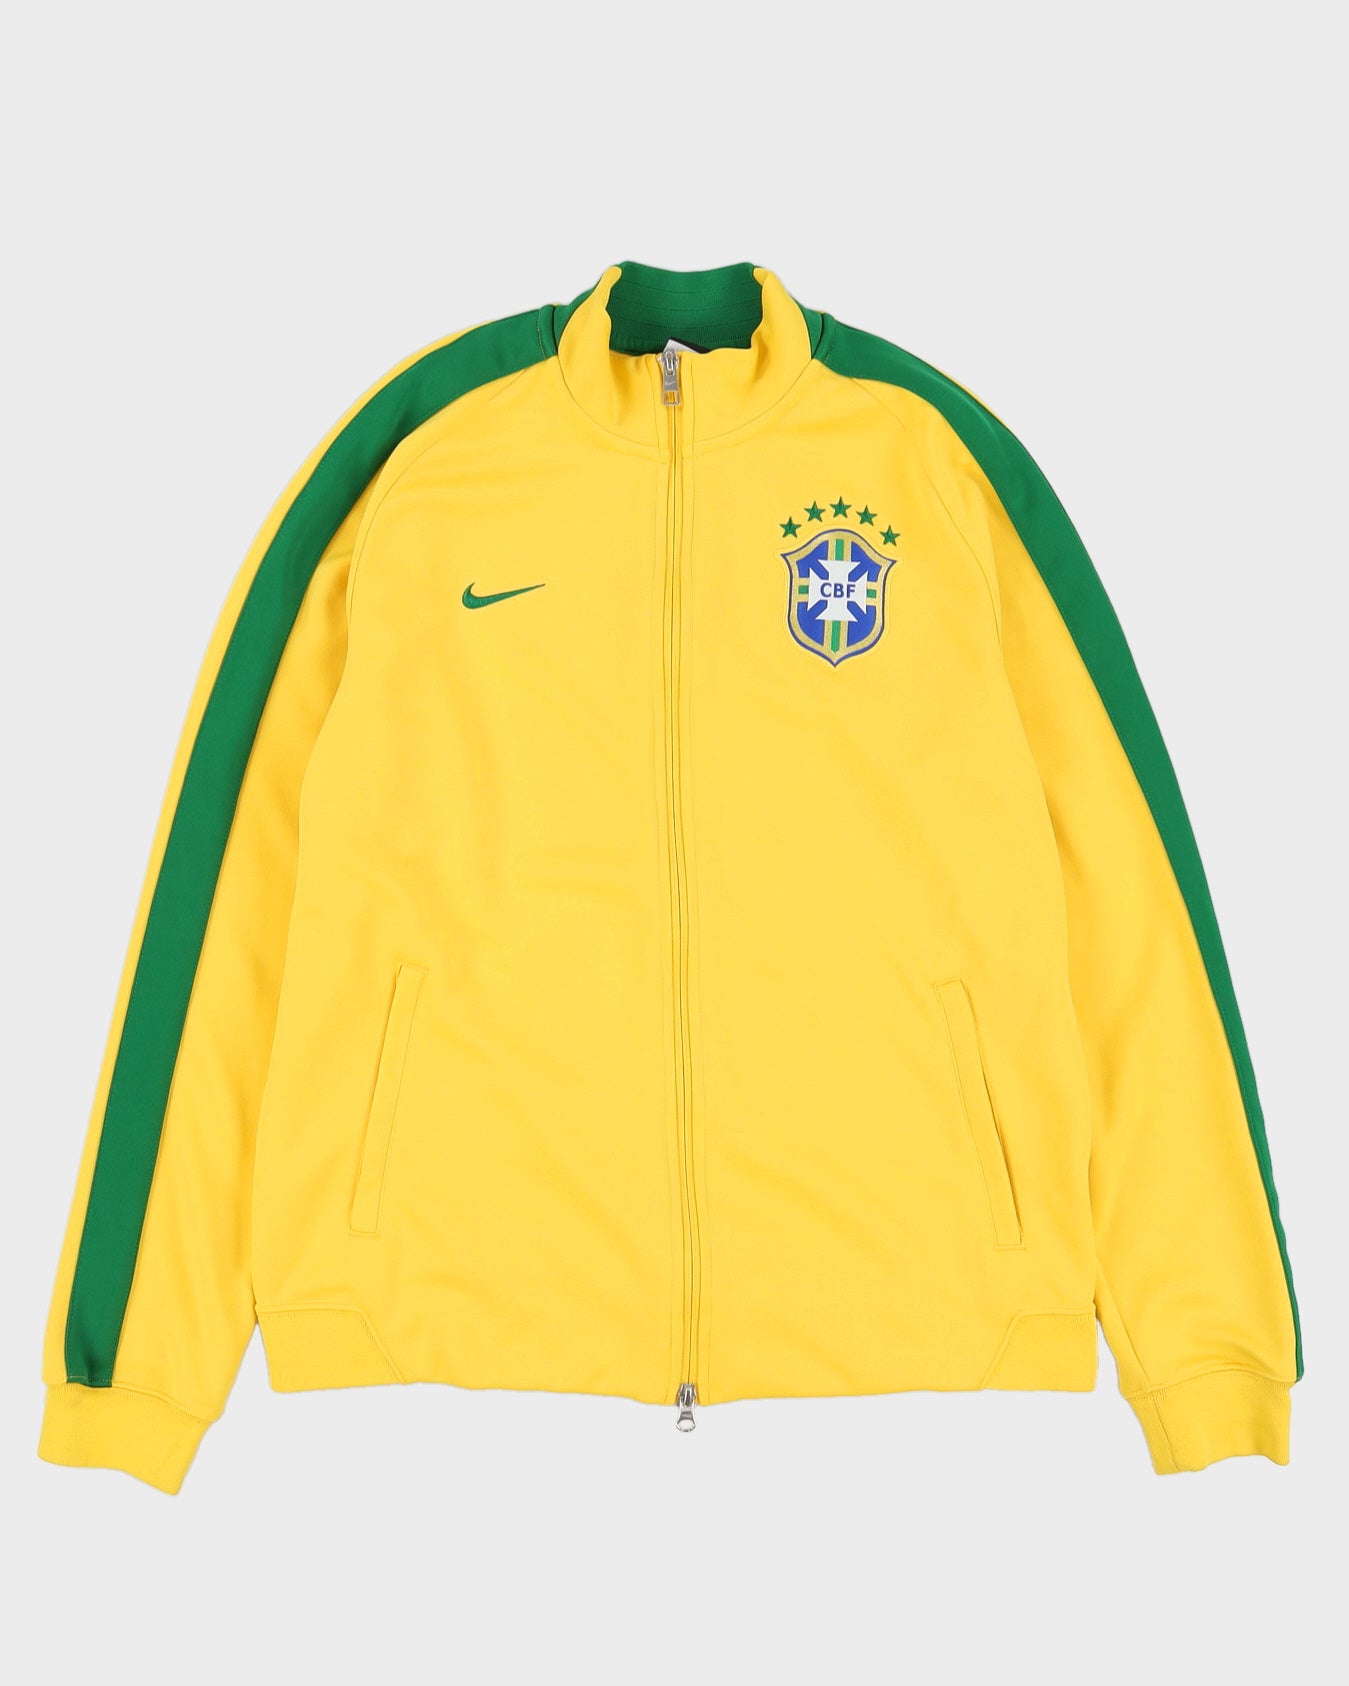 2013-14 International Team Brazil Yellow Track Jacket - L